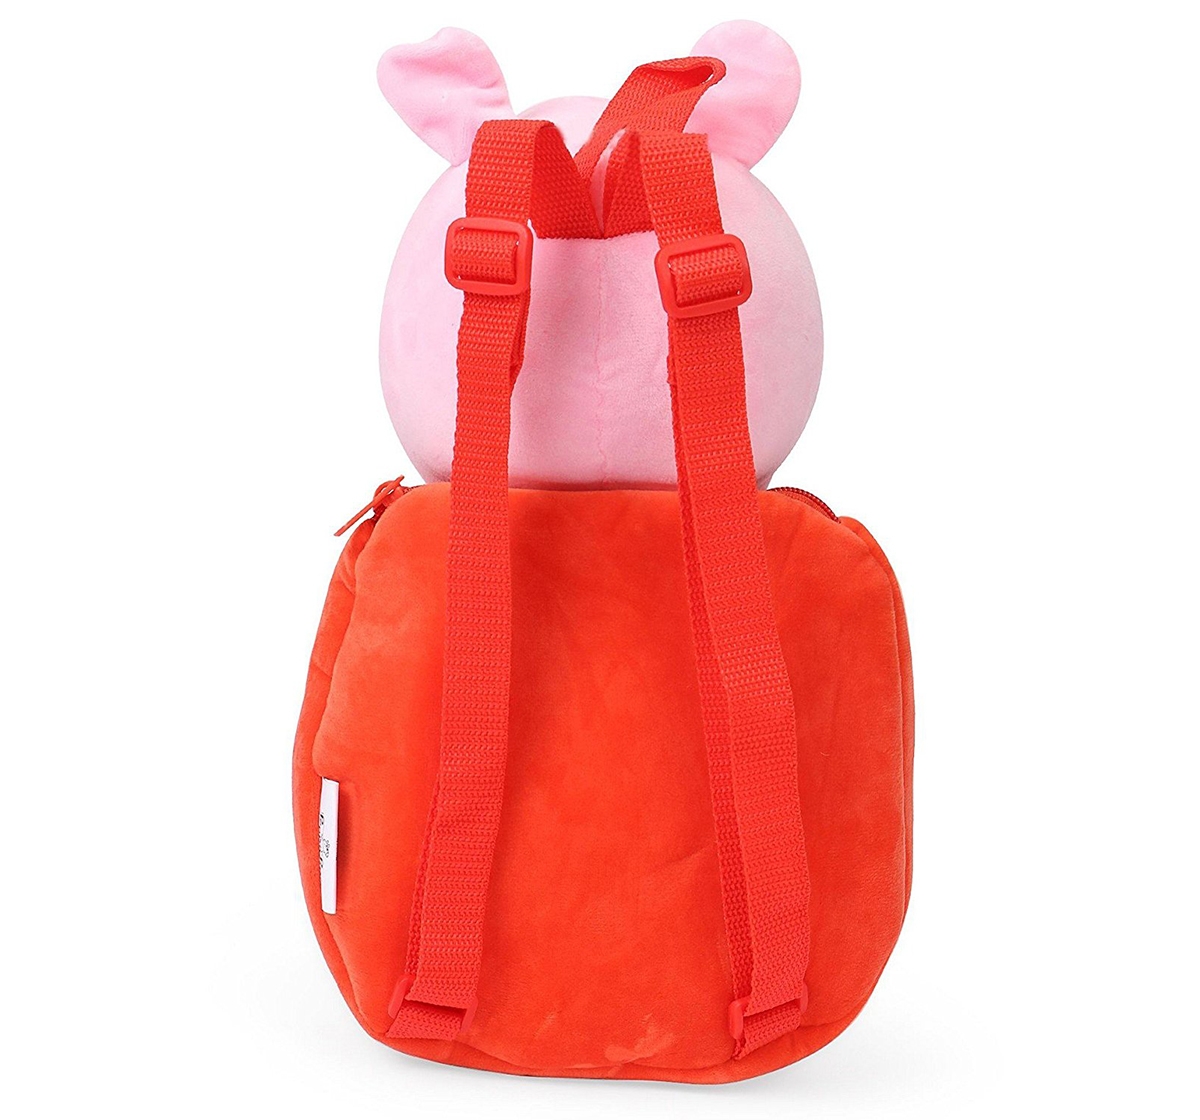 Peppa Pig | Peppa Pig Soft Toy Bag Multi Color 44 Cm for Kids age 2Y+ 4